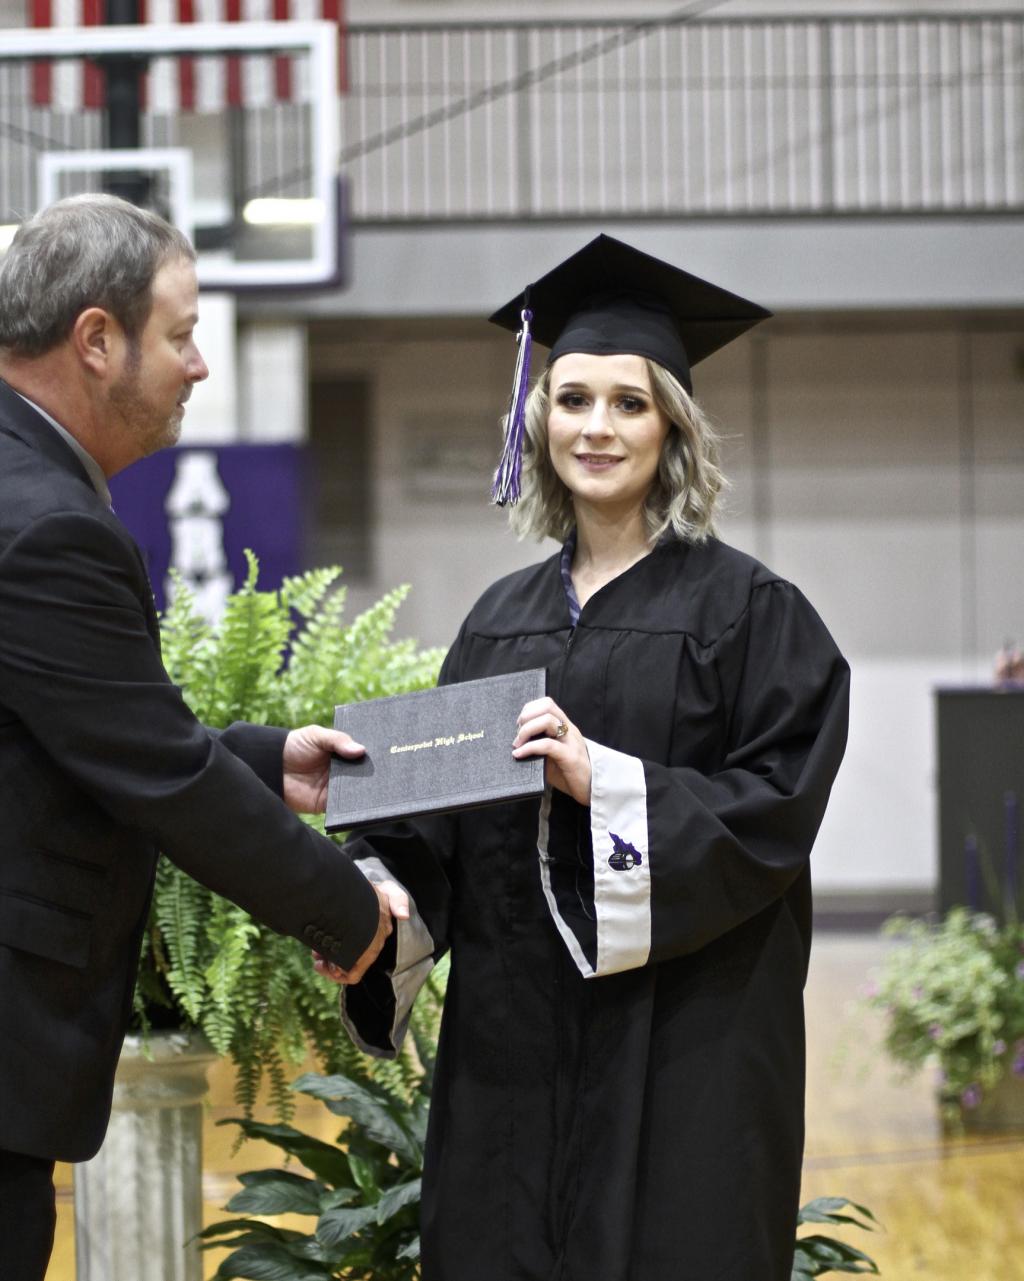 2019 Graduation Ceremony